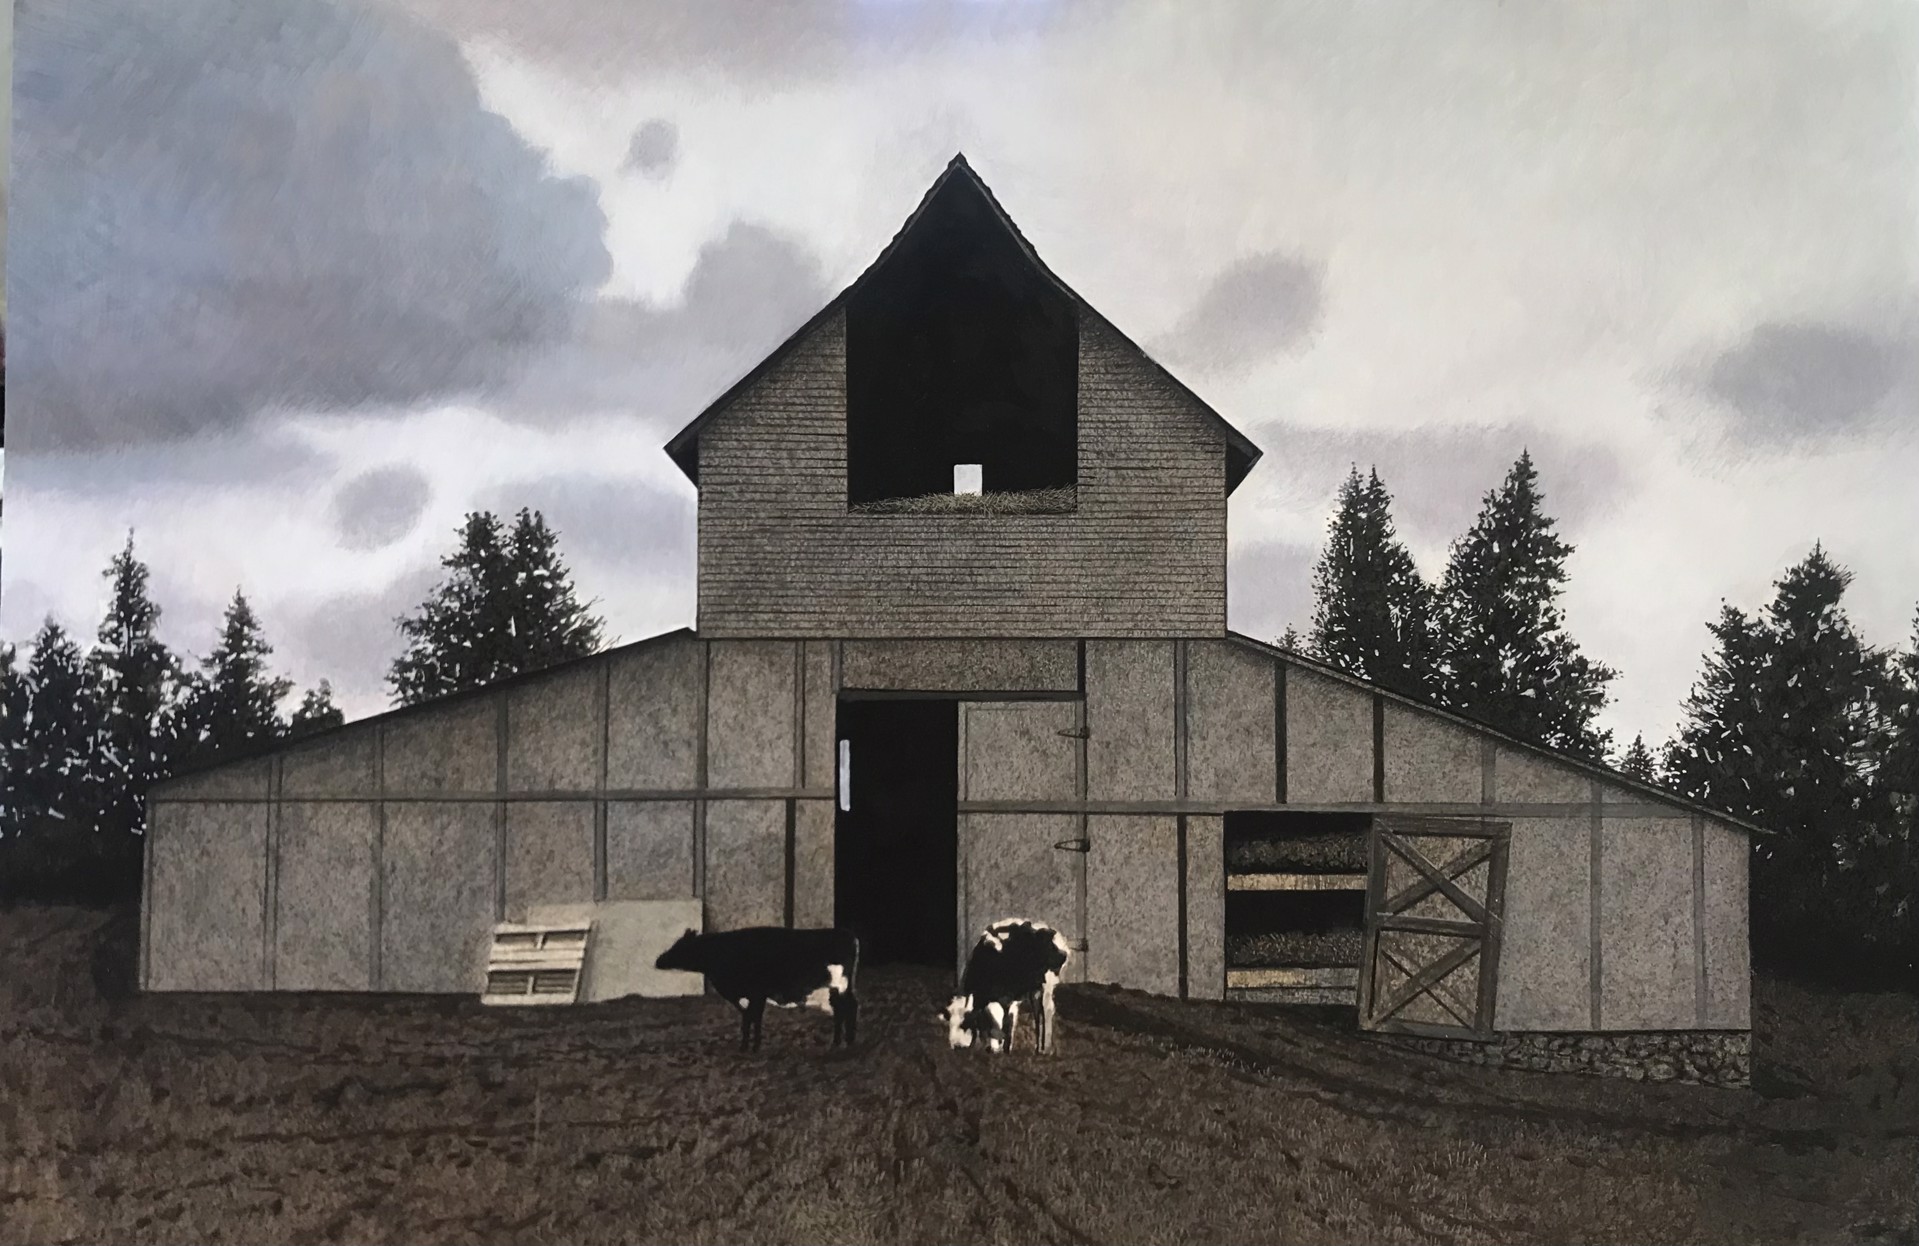 Evening Farm by Eric G. Thompson